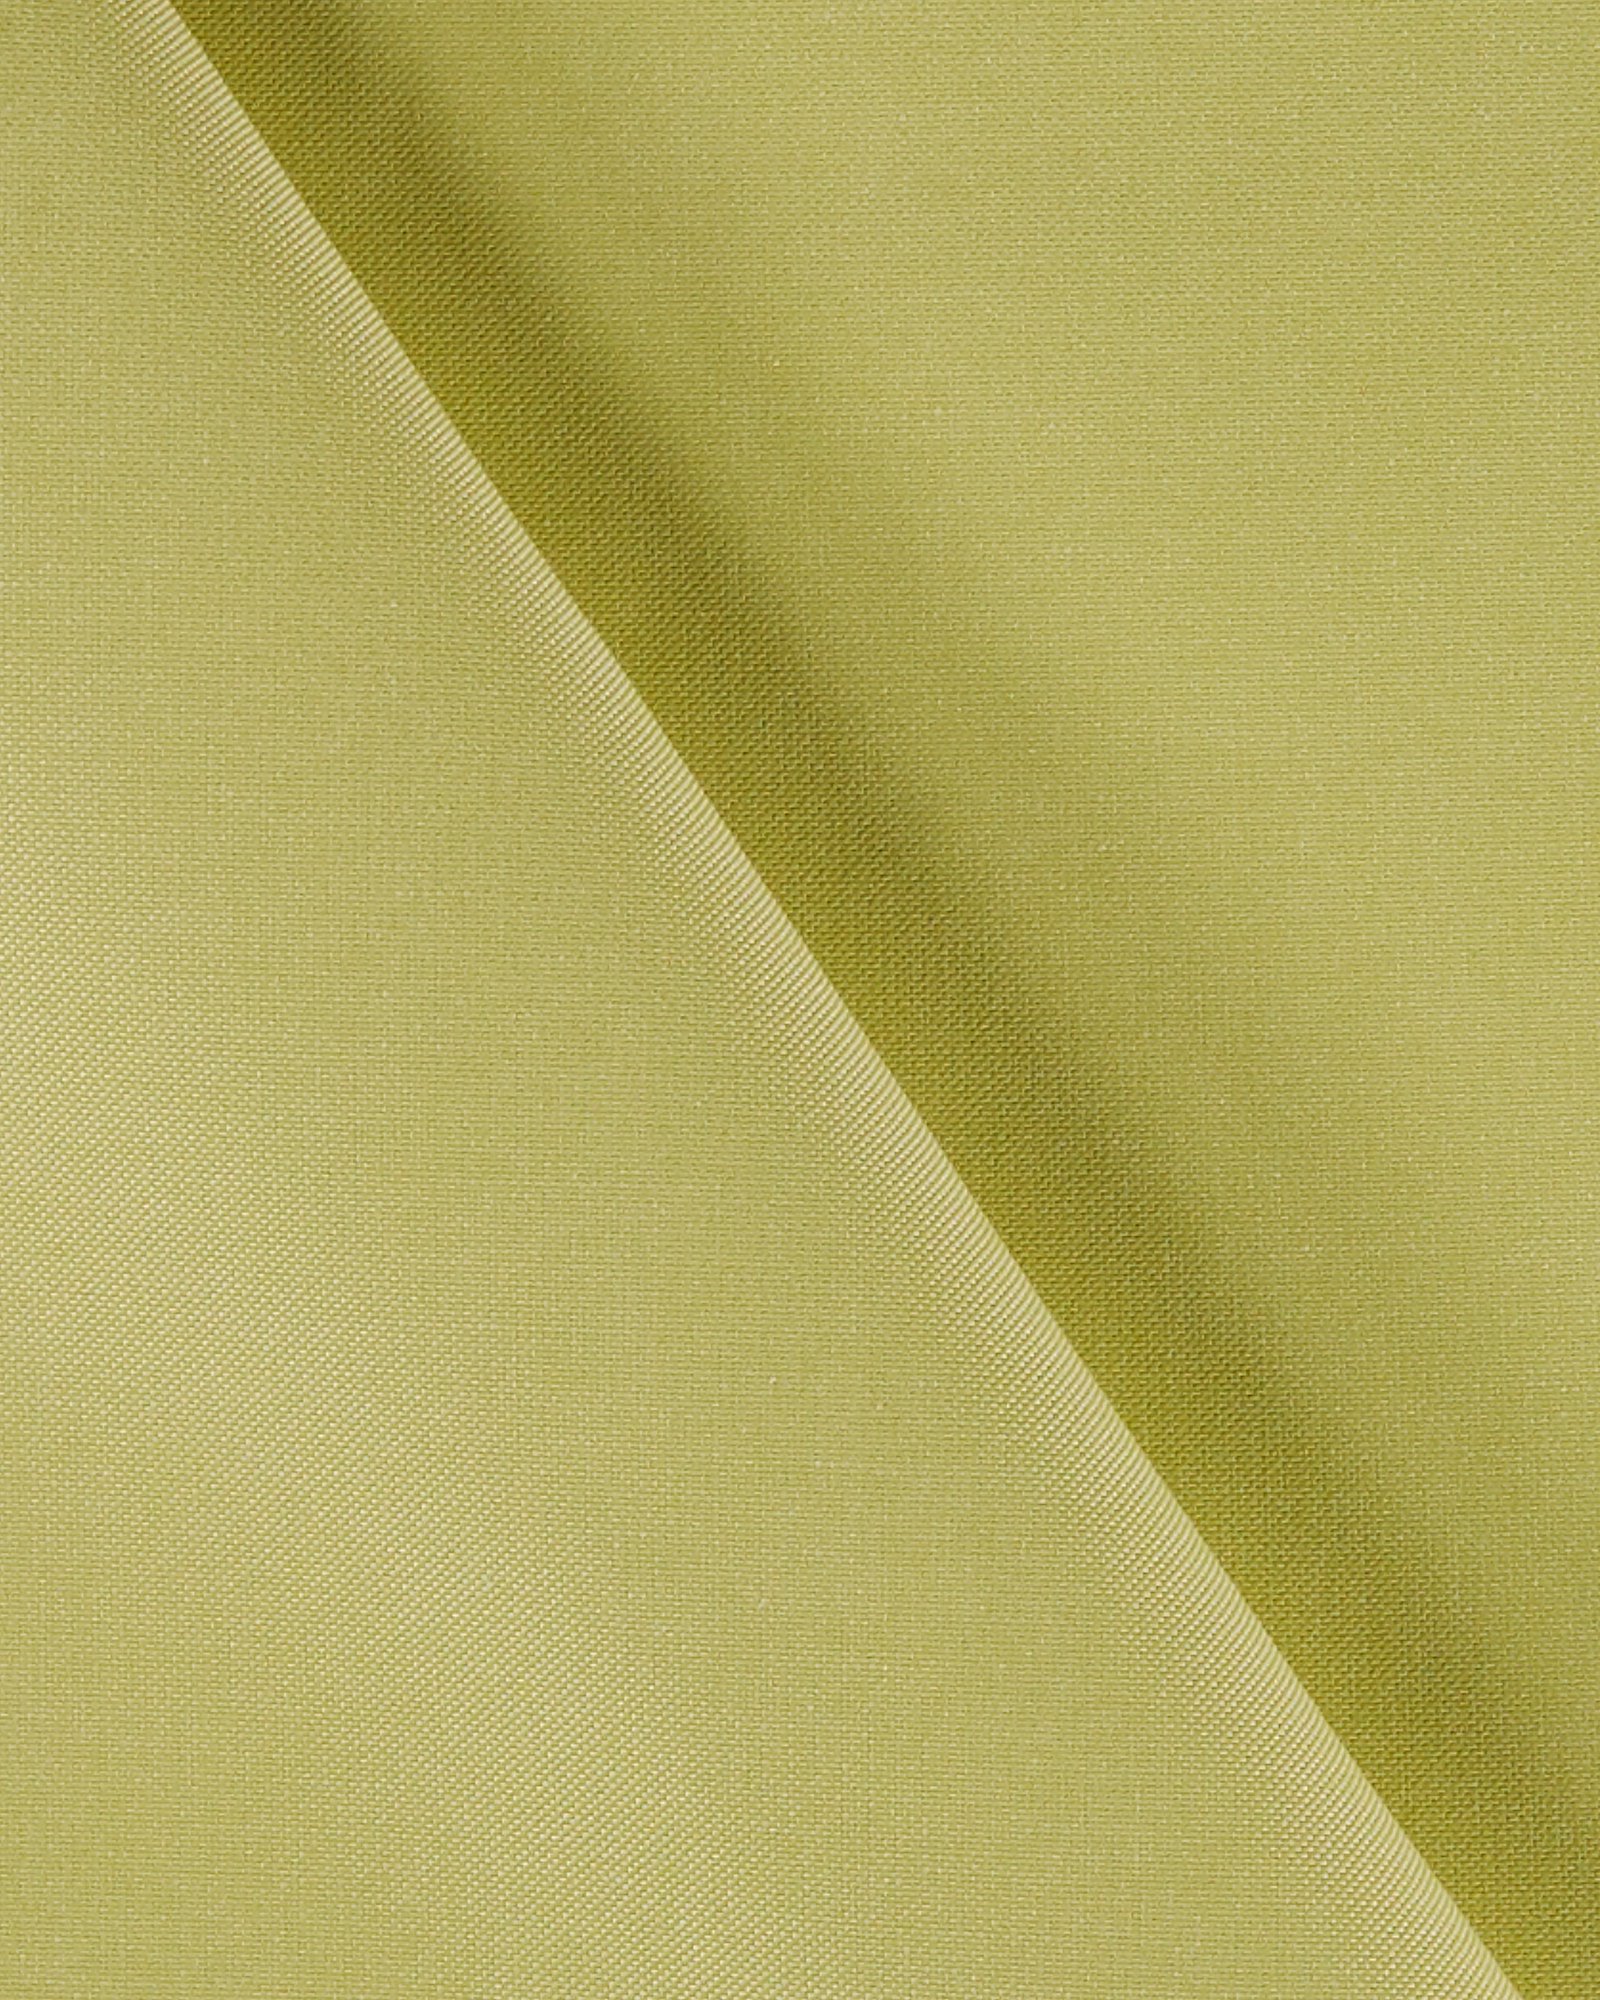 Outdoor canvas waterproof yellow 826622_pack